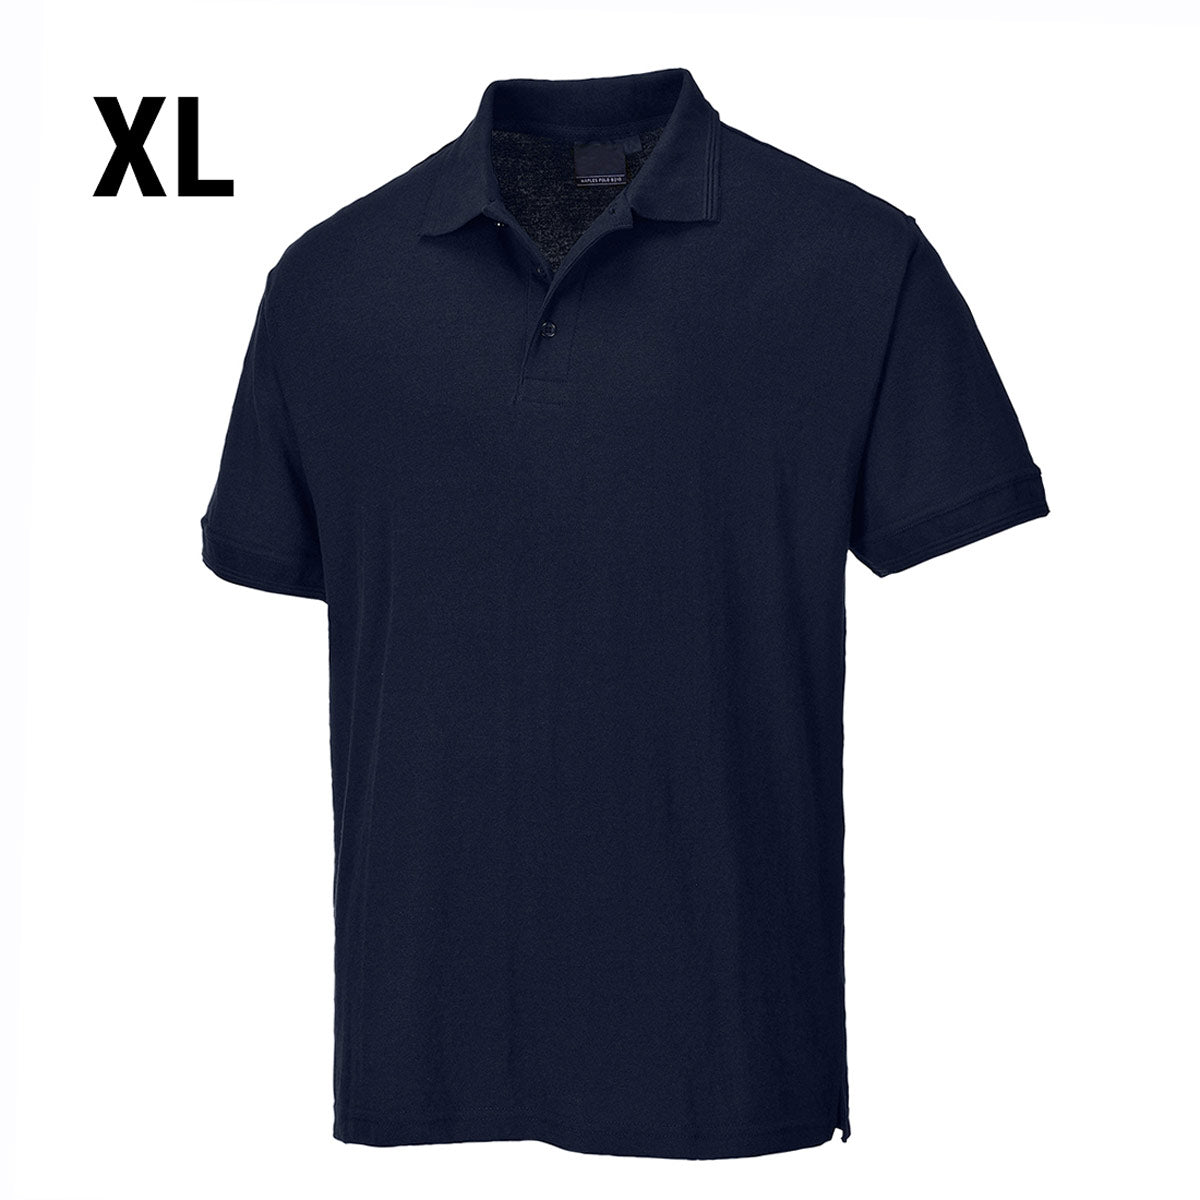 Poloskjorte til mænd - Dark Navy - Størrelse: XL